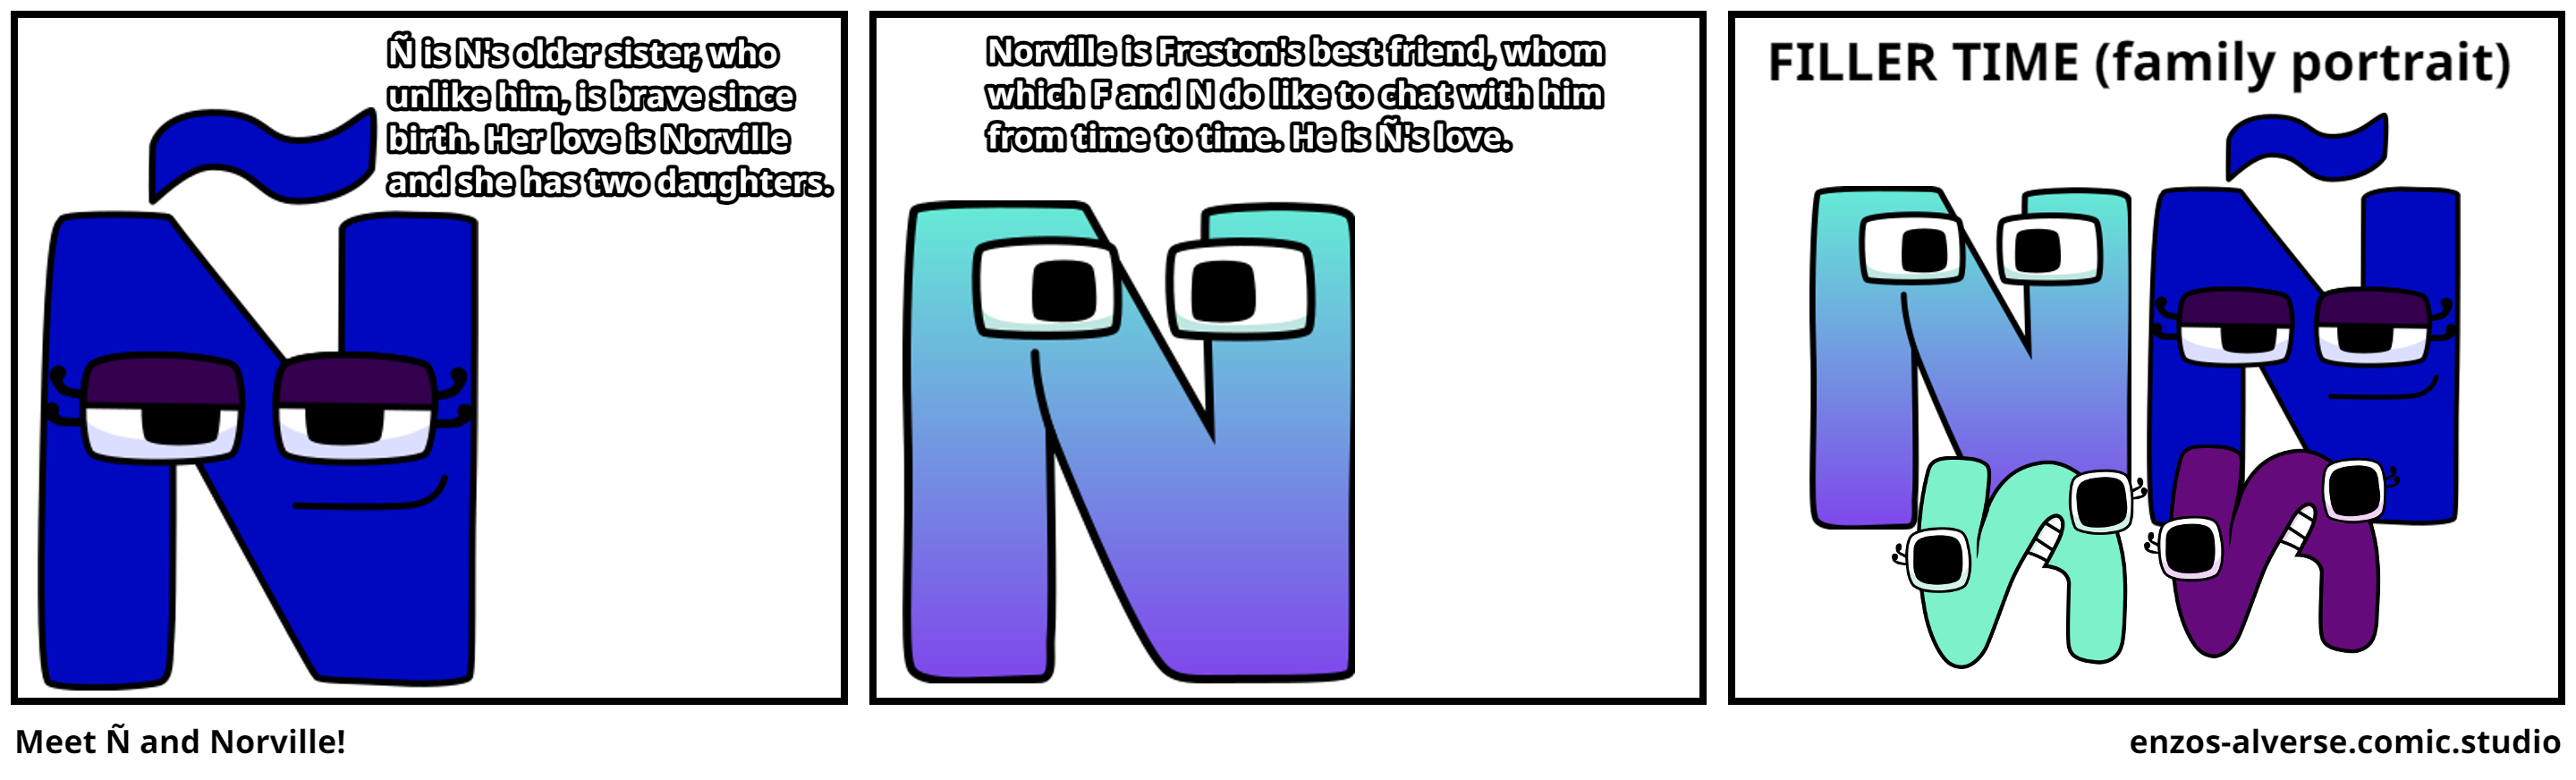 Meet Ñ and Norville!